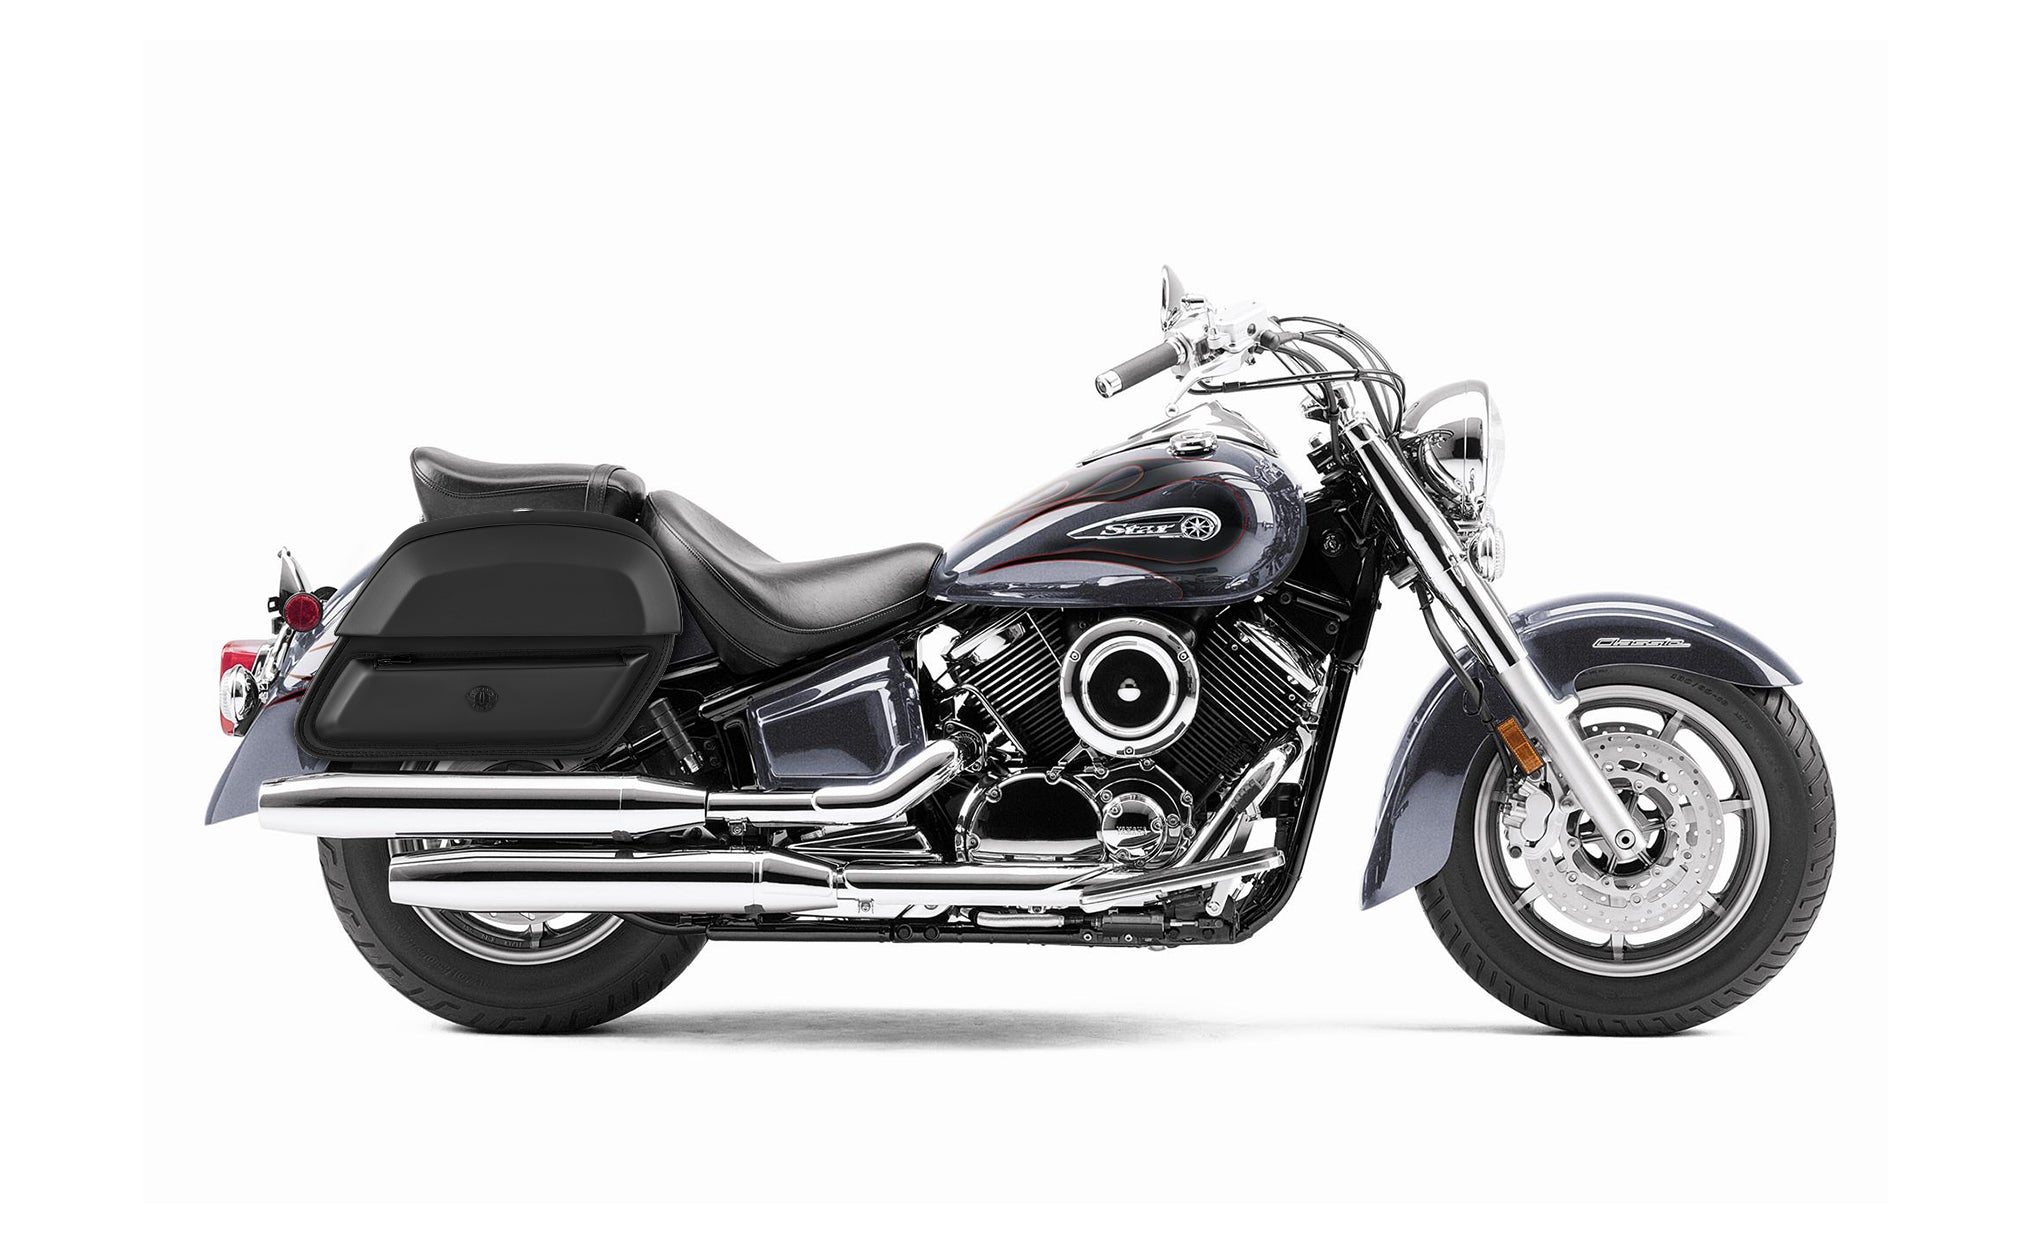 28L - Wraith Medium Yamaha V Star 1100 Classic XVS11A Leather Motorcycle Saddlebags BAG on Bike View @expand